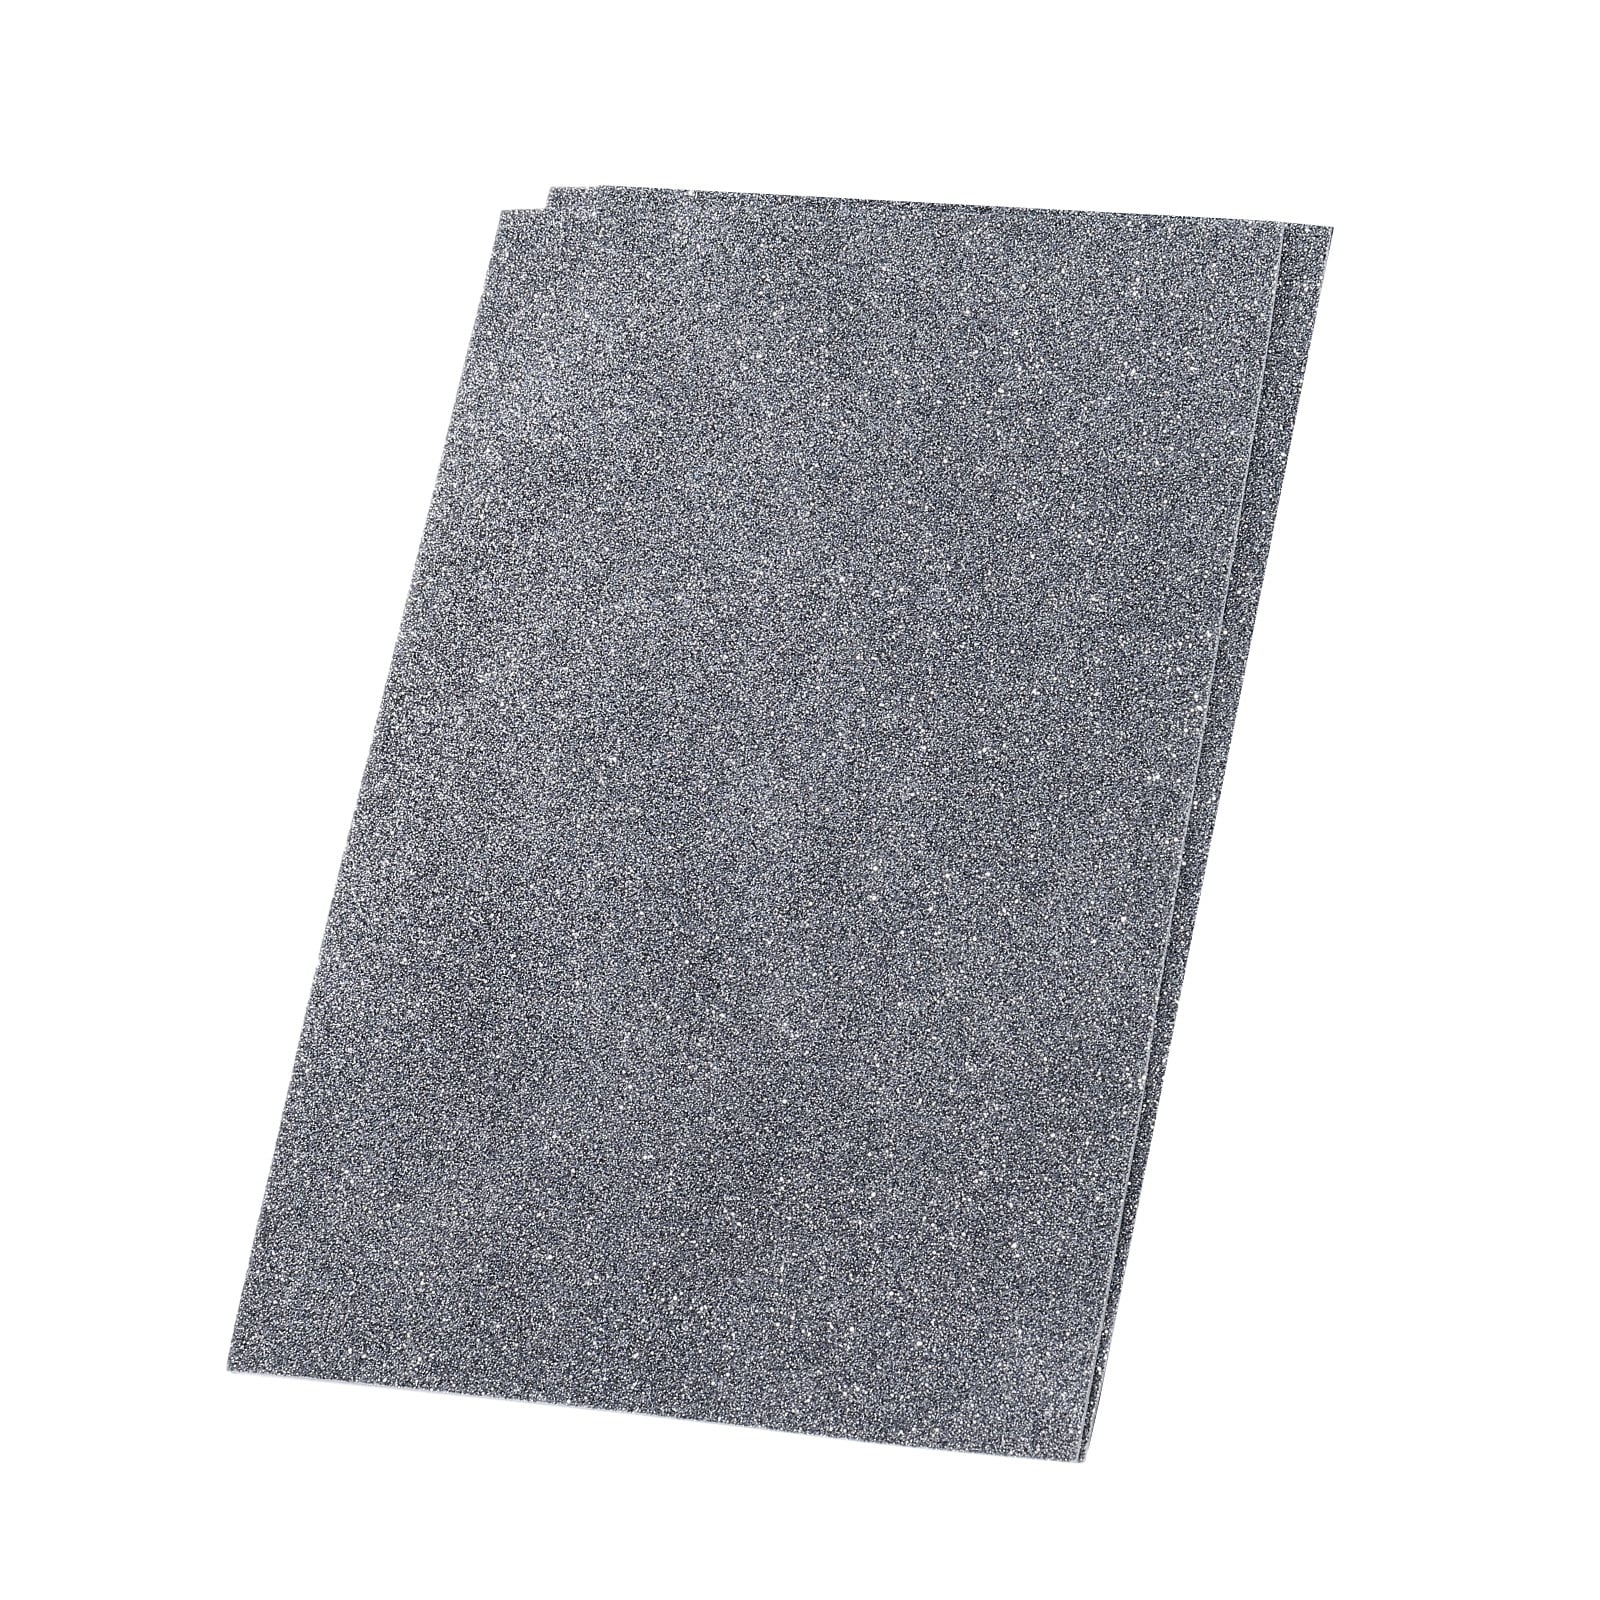 Glitter EVA Foam Sheets Soft Paper Self-Adhesive 11.8 x 7.8 Inch